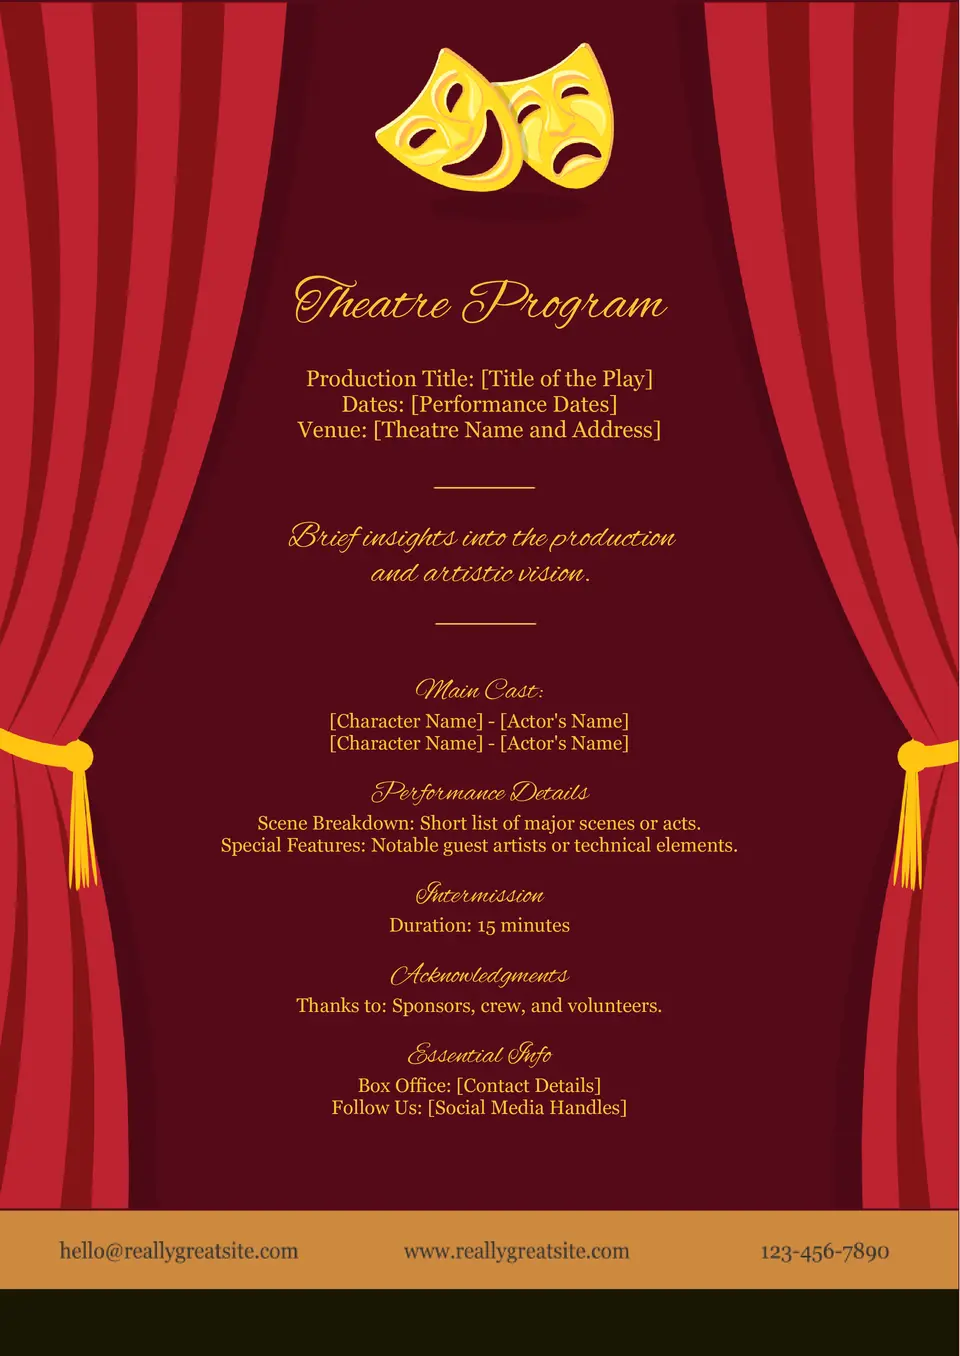 Theatre Program Template